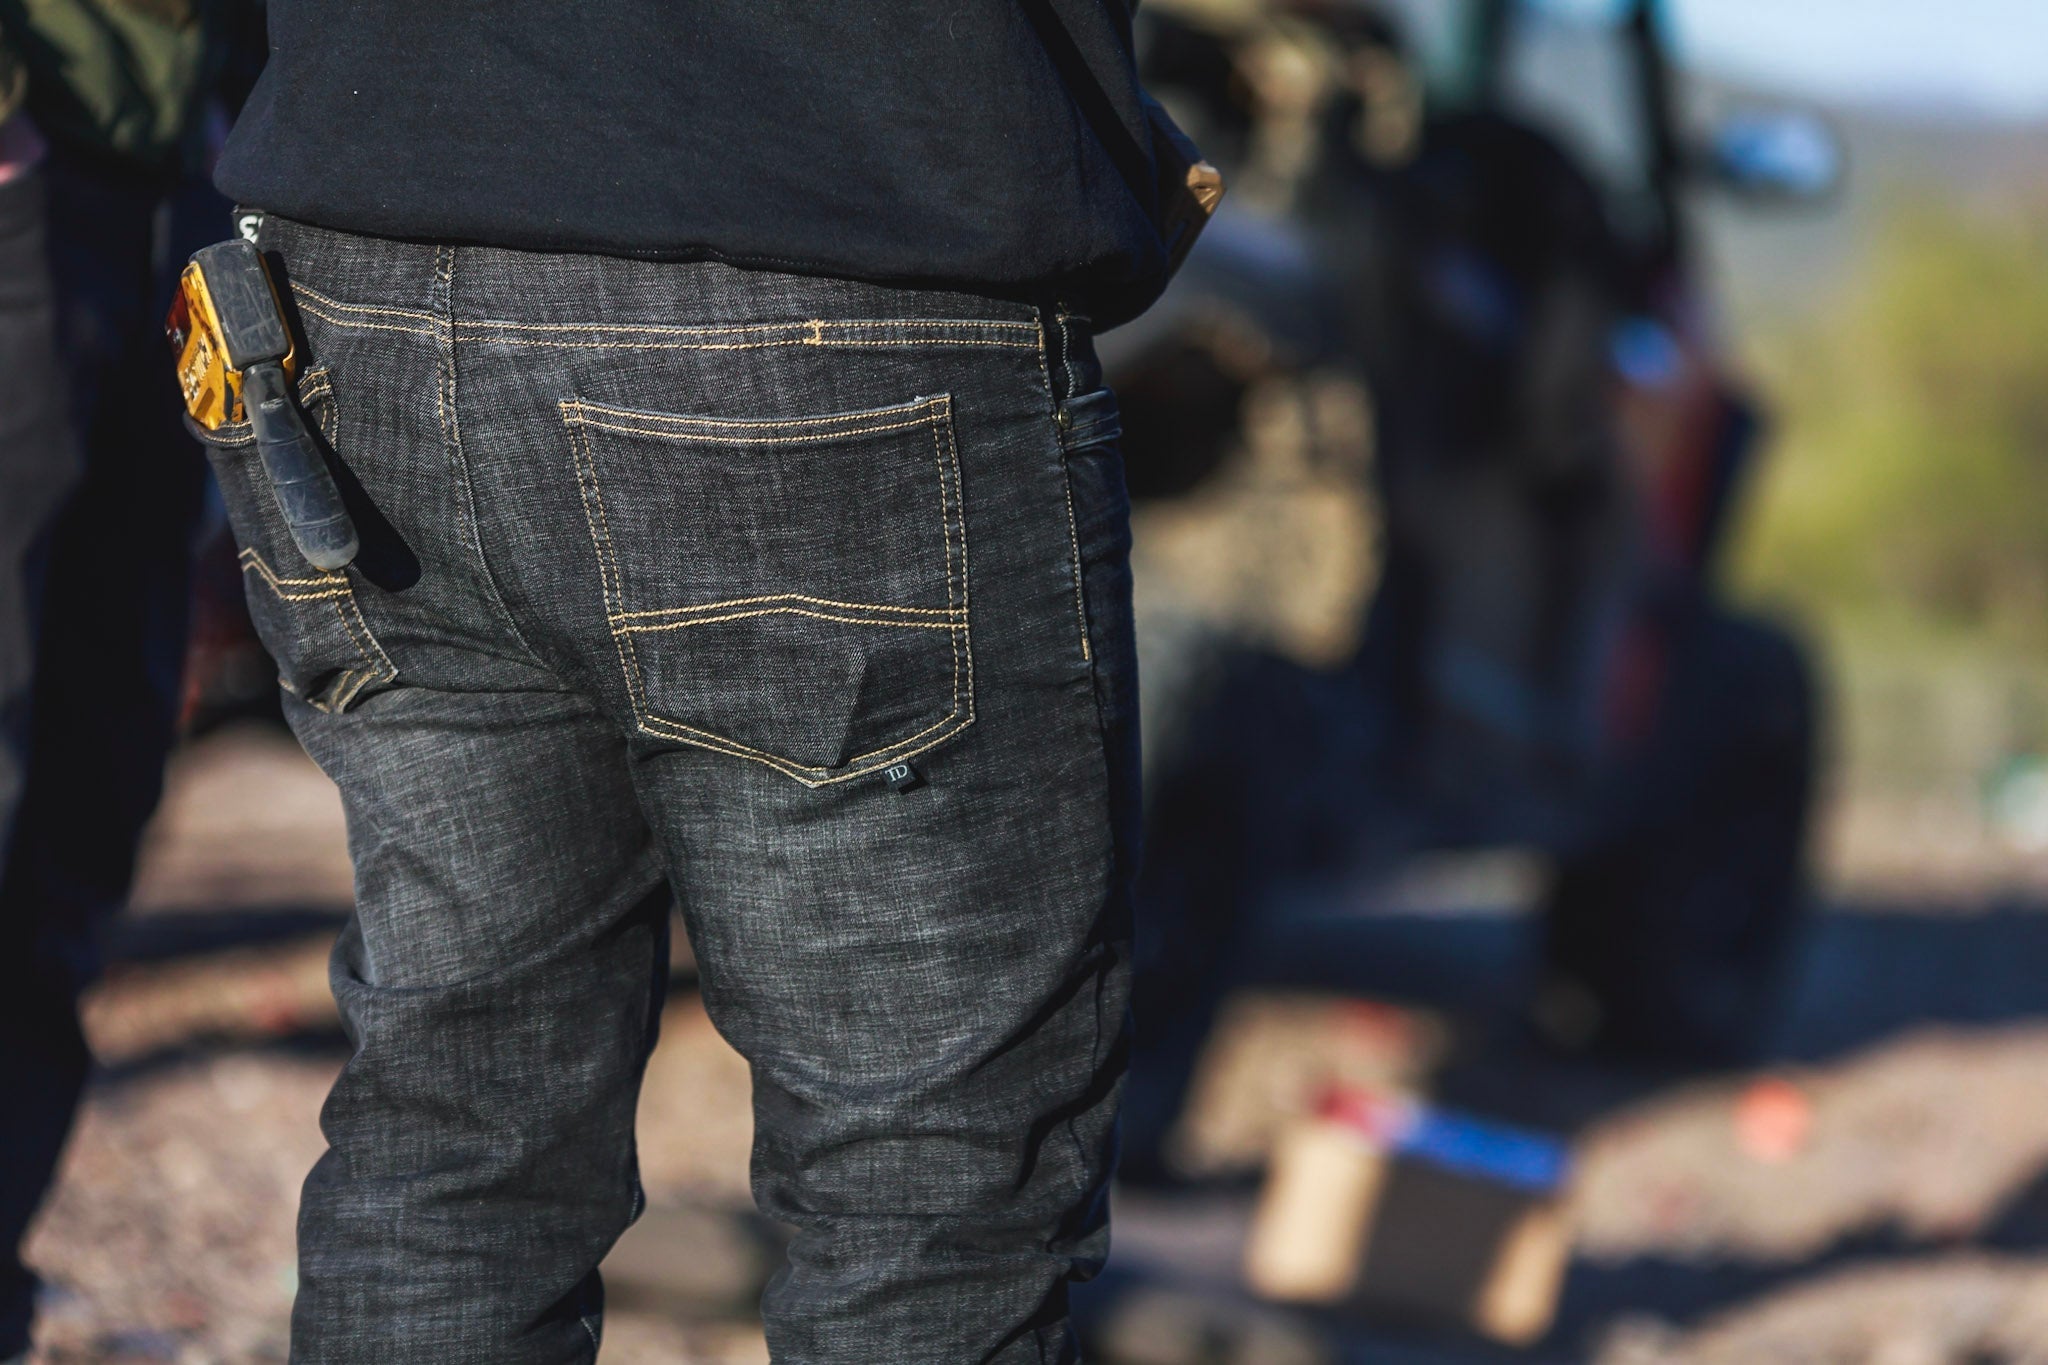 Tactical Distributors denim jeans being worn